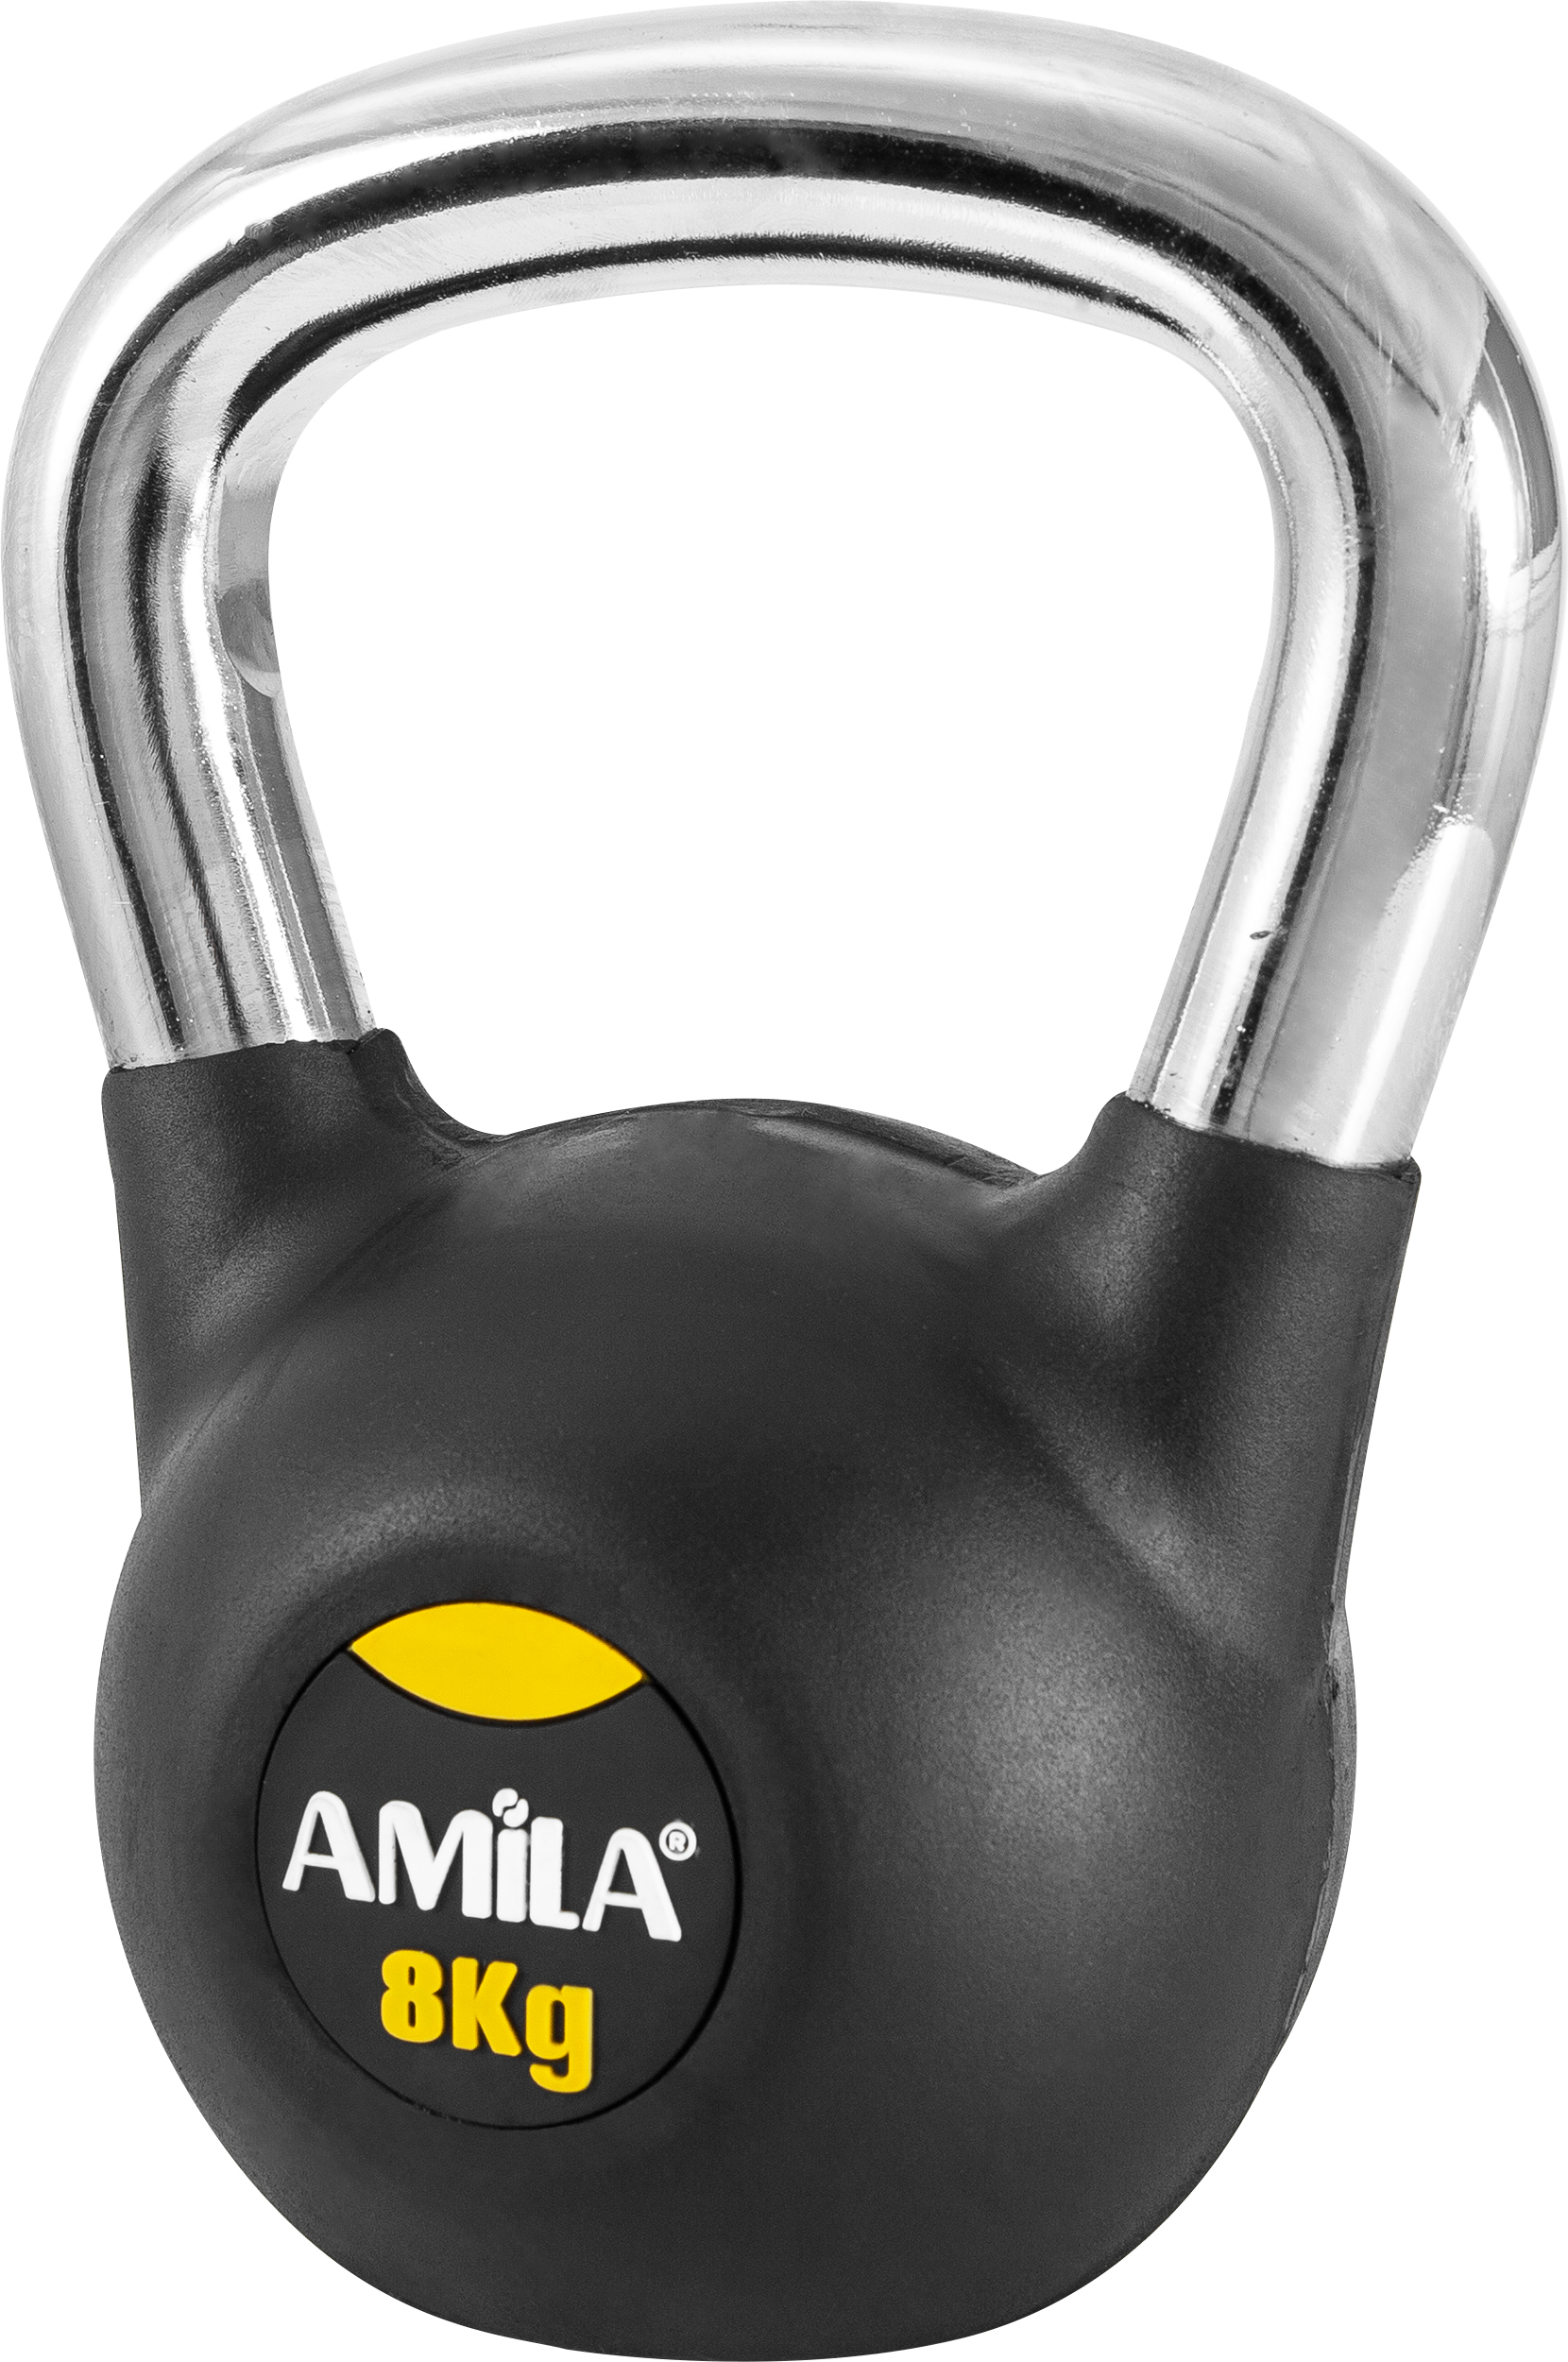 AMILA Kettlebell Rubber Cover Cr Handle 8kg